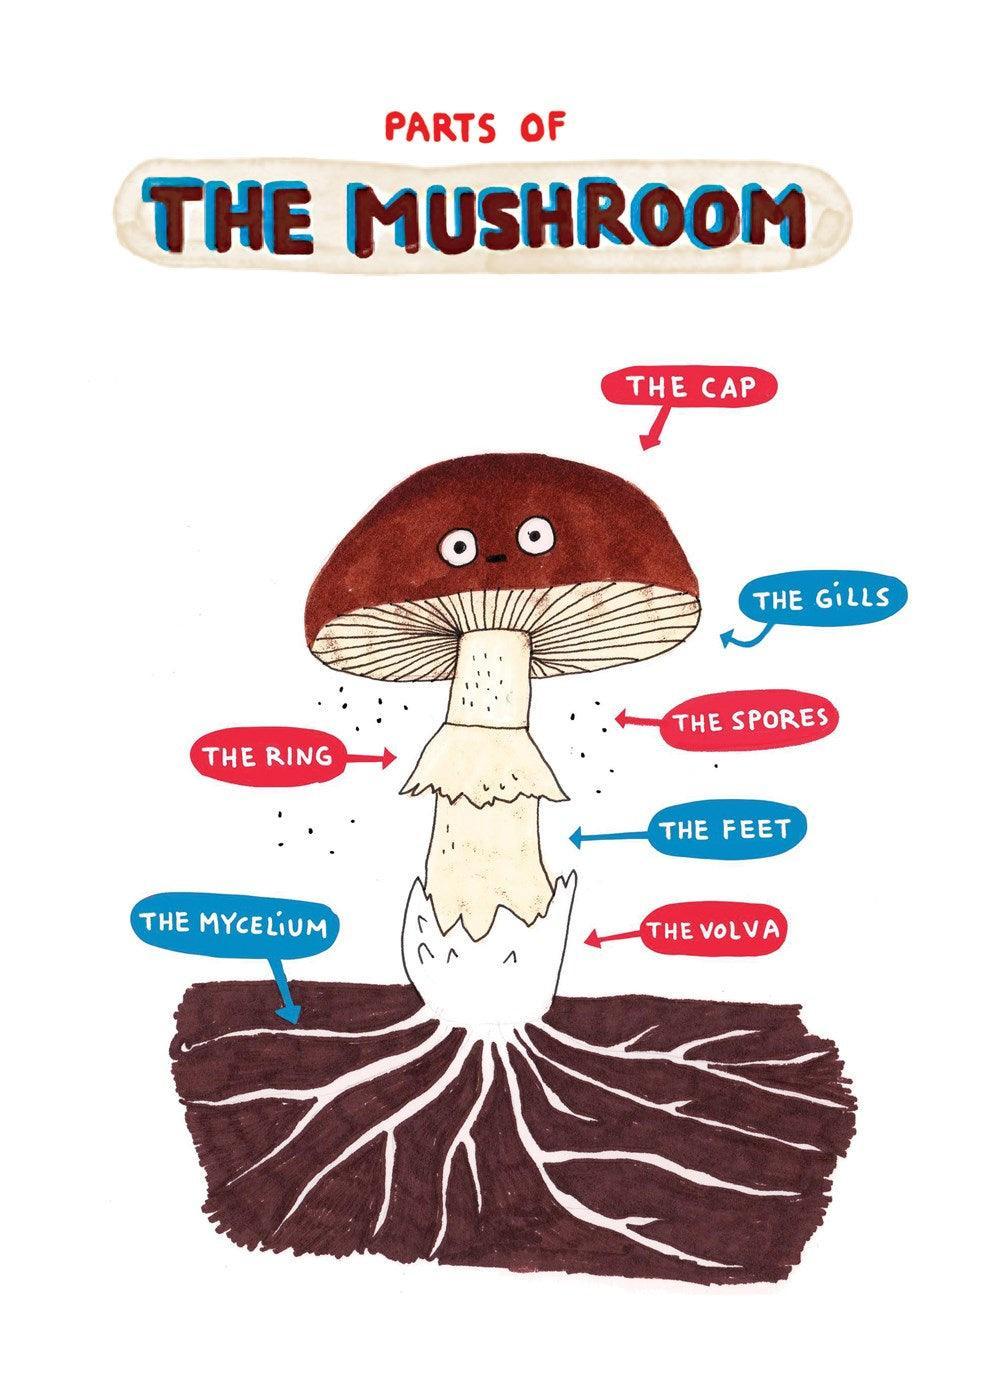 Mushroom Fan Club - Why and Whale